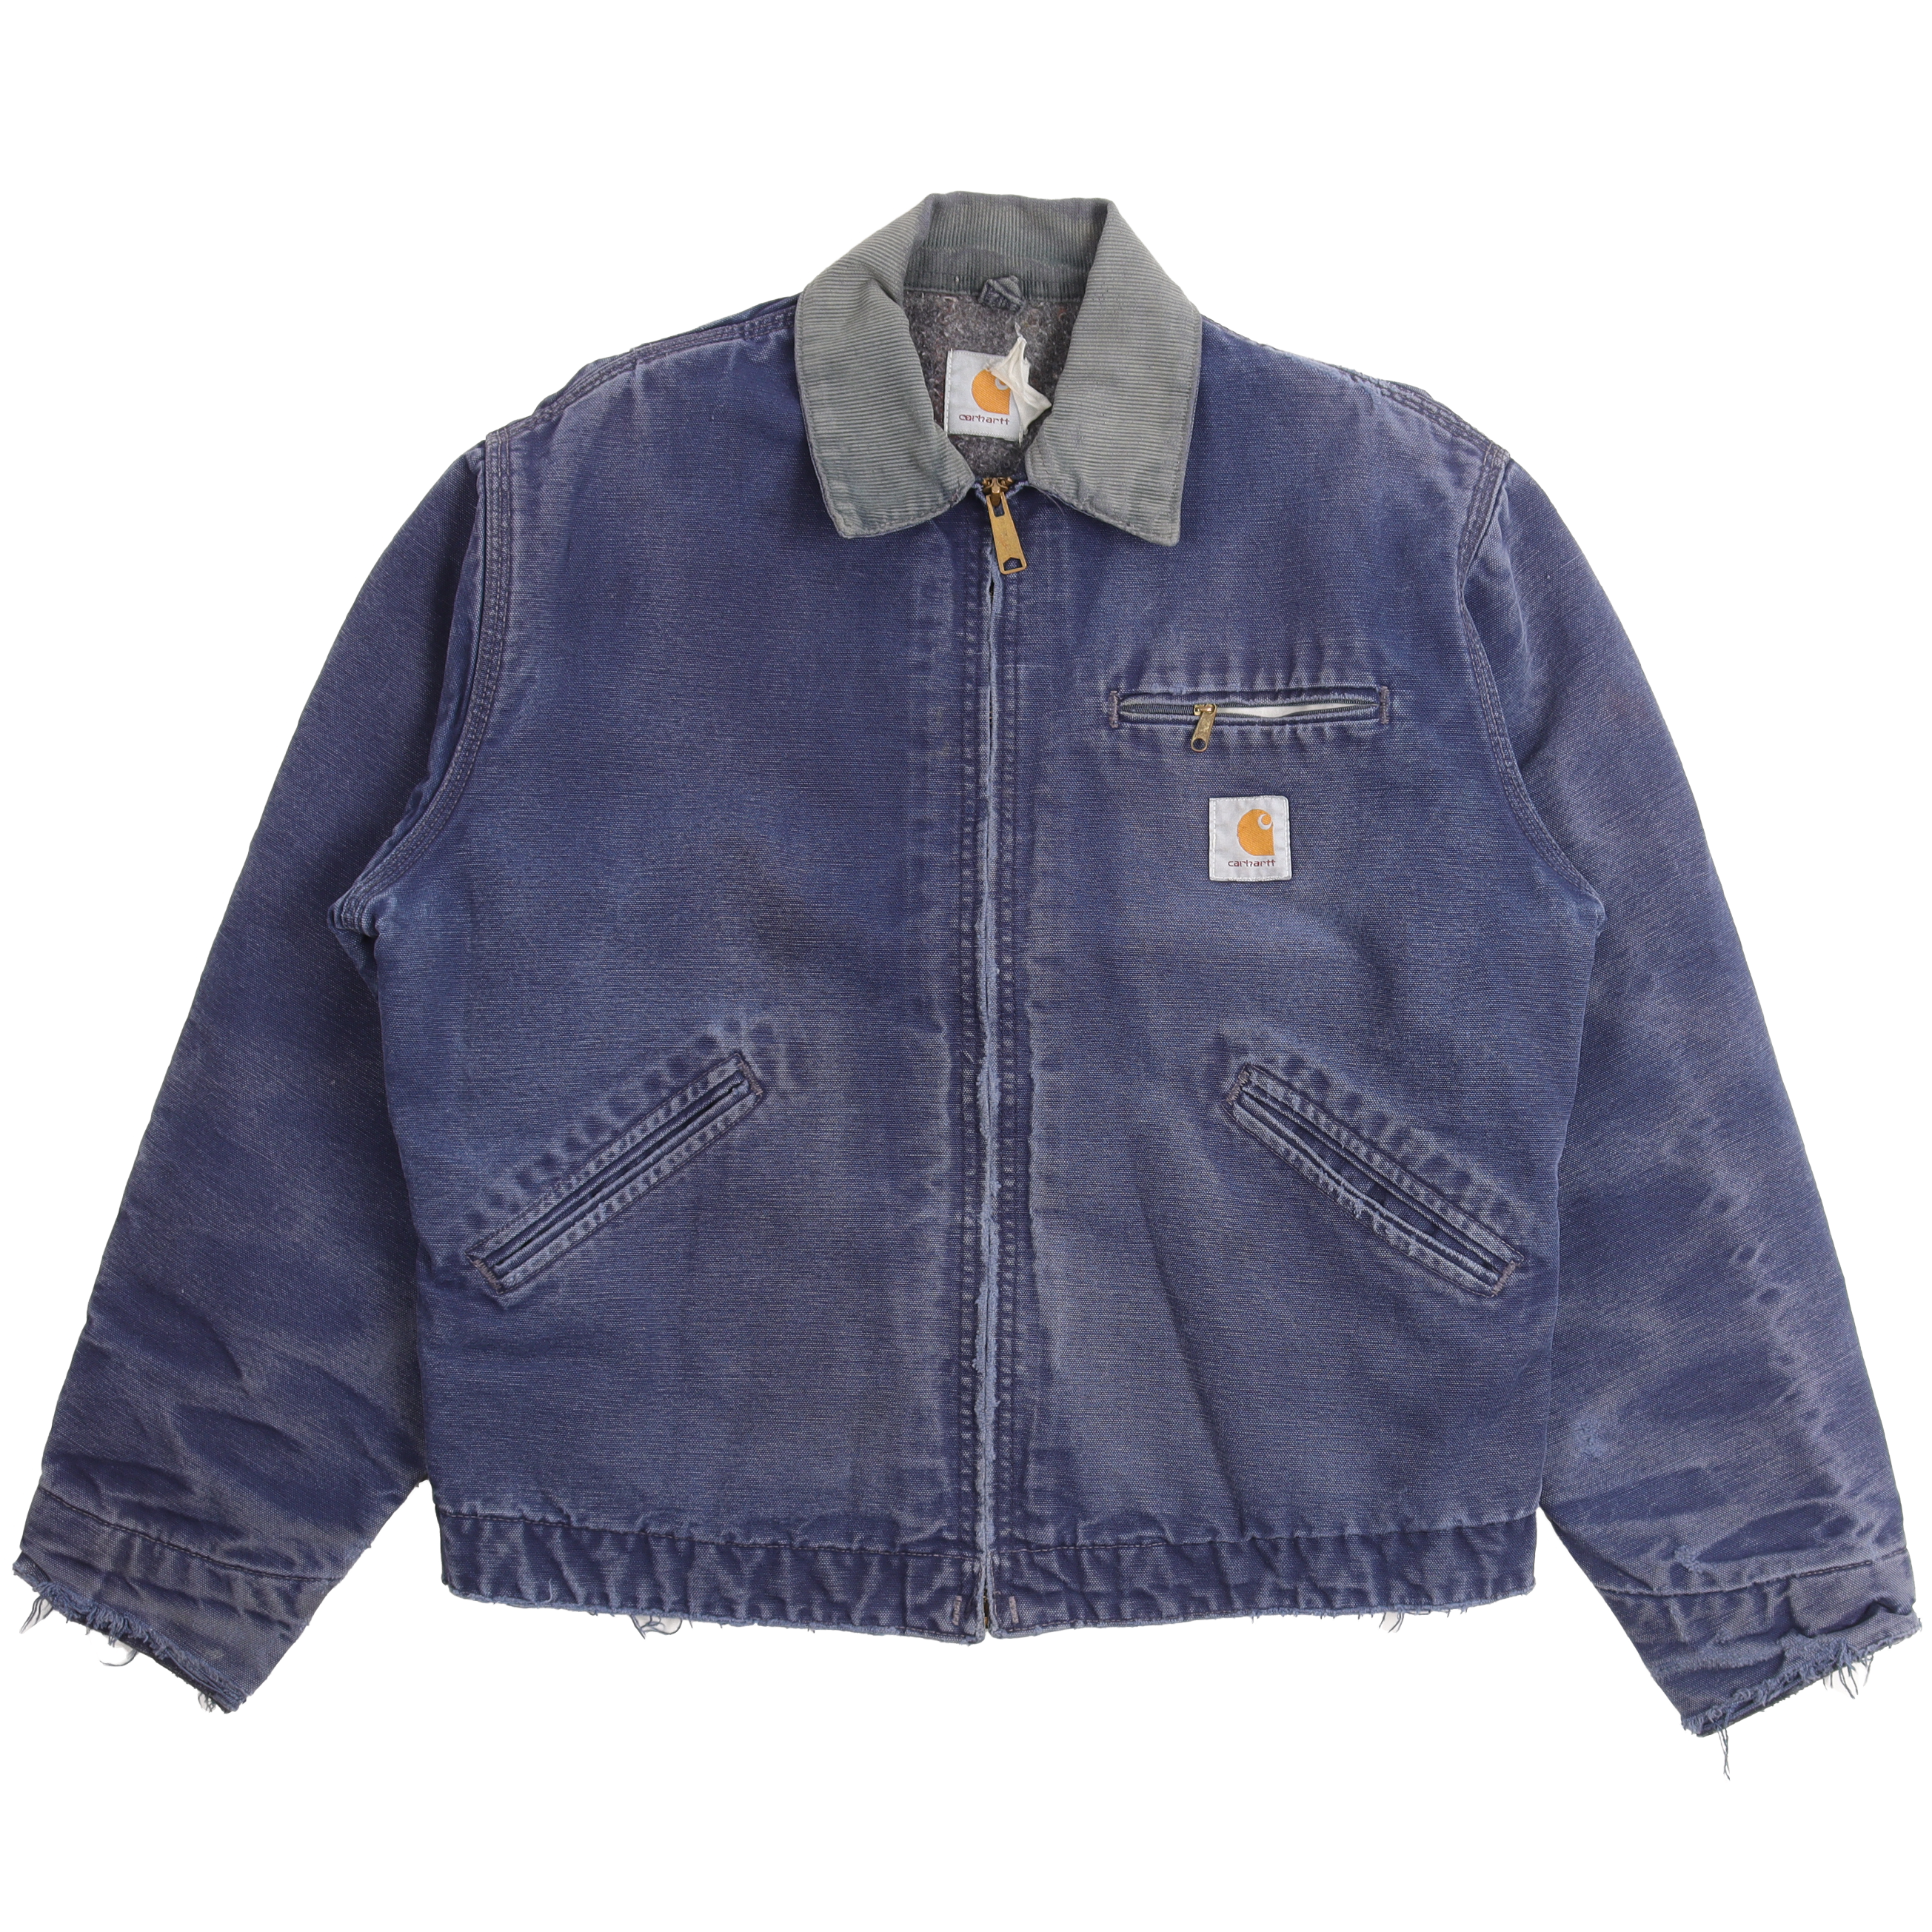 1990's Detroit Work Jacket